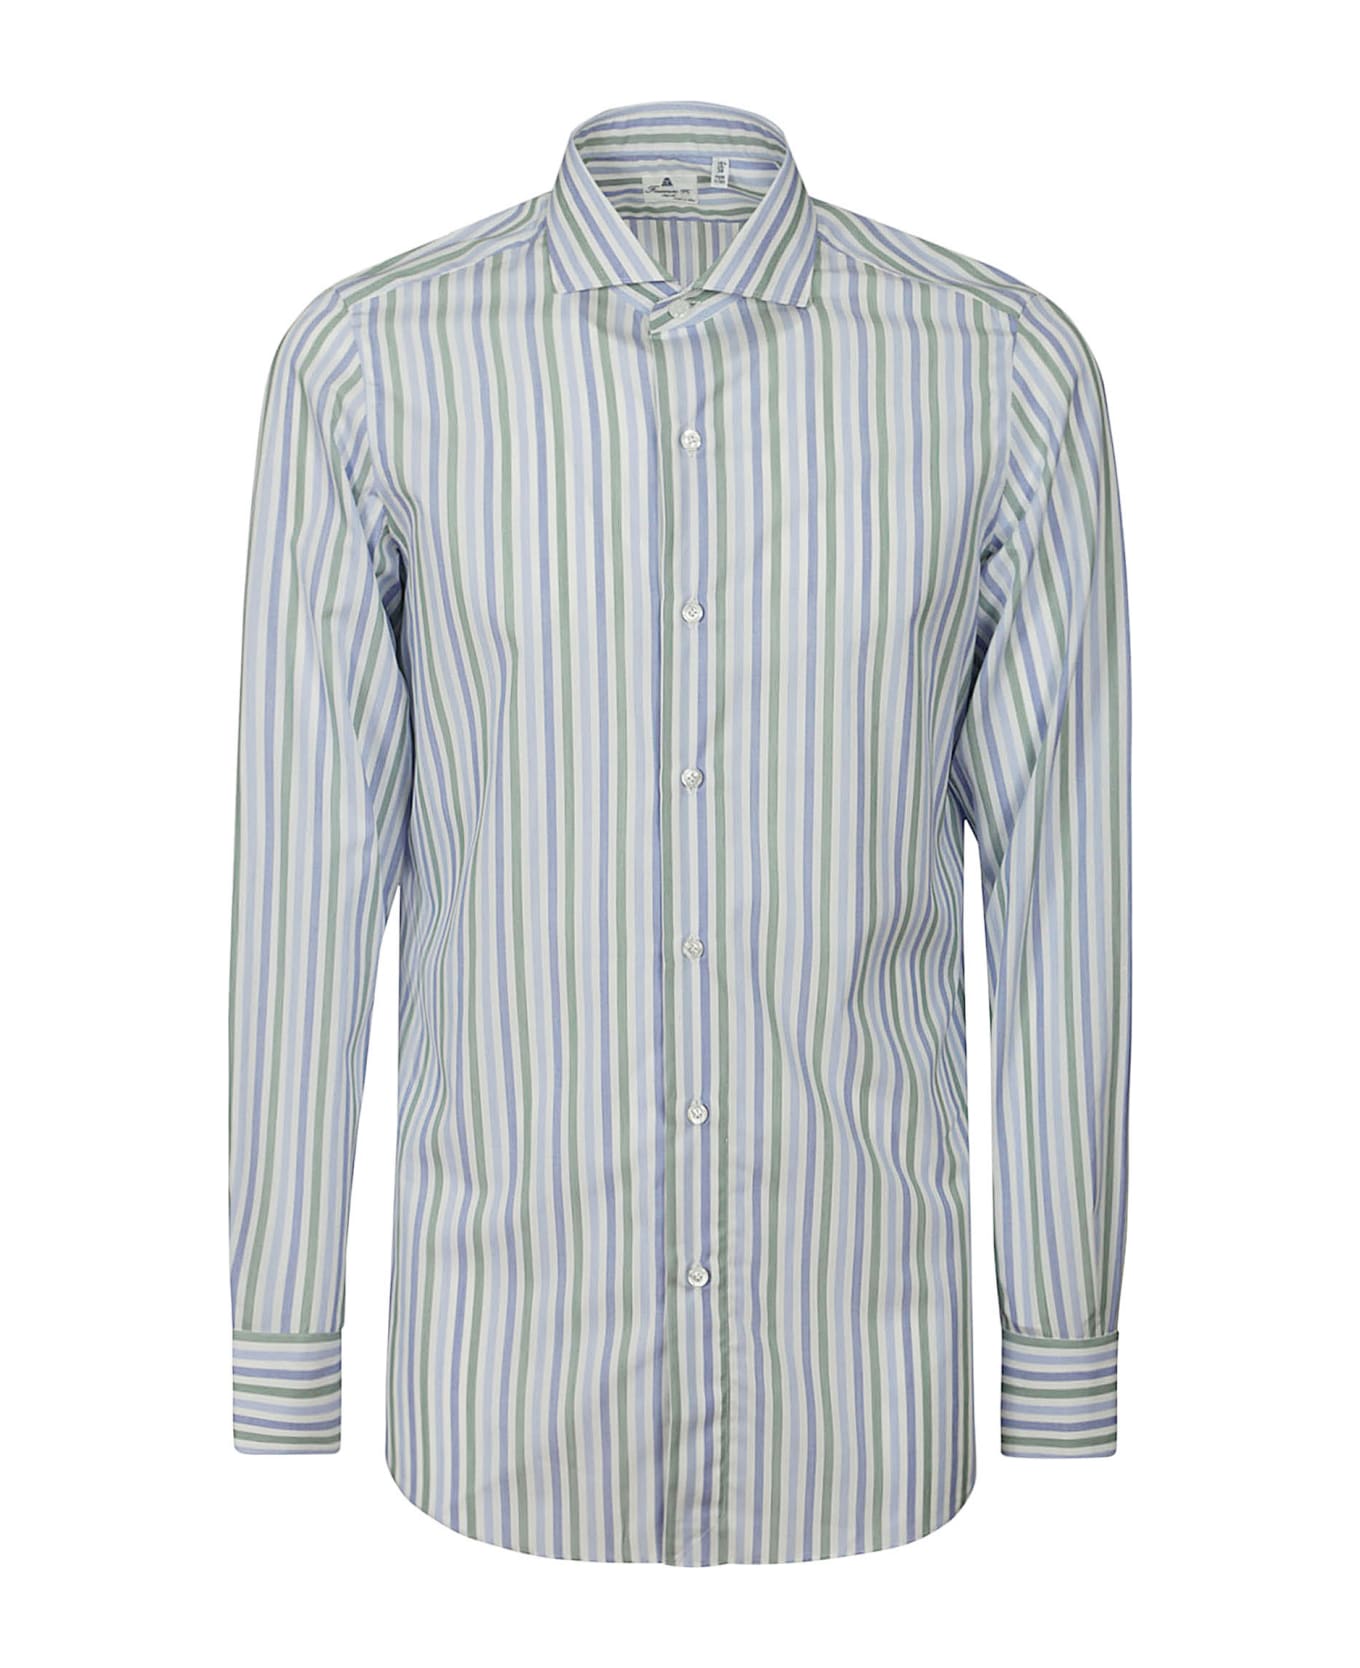 Finamore Shirt 170.2 - Stripes シャツ